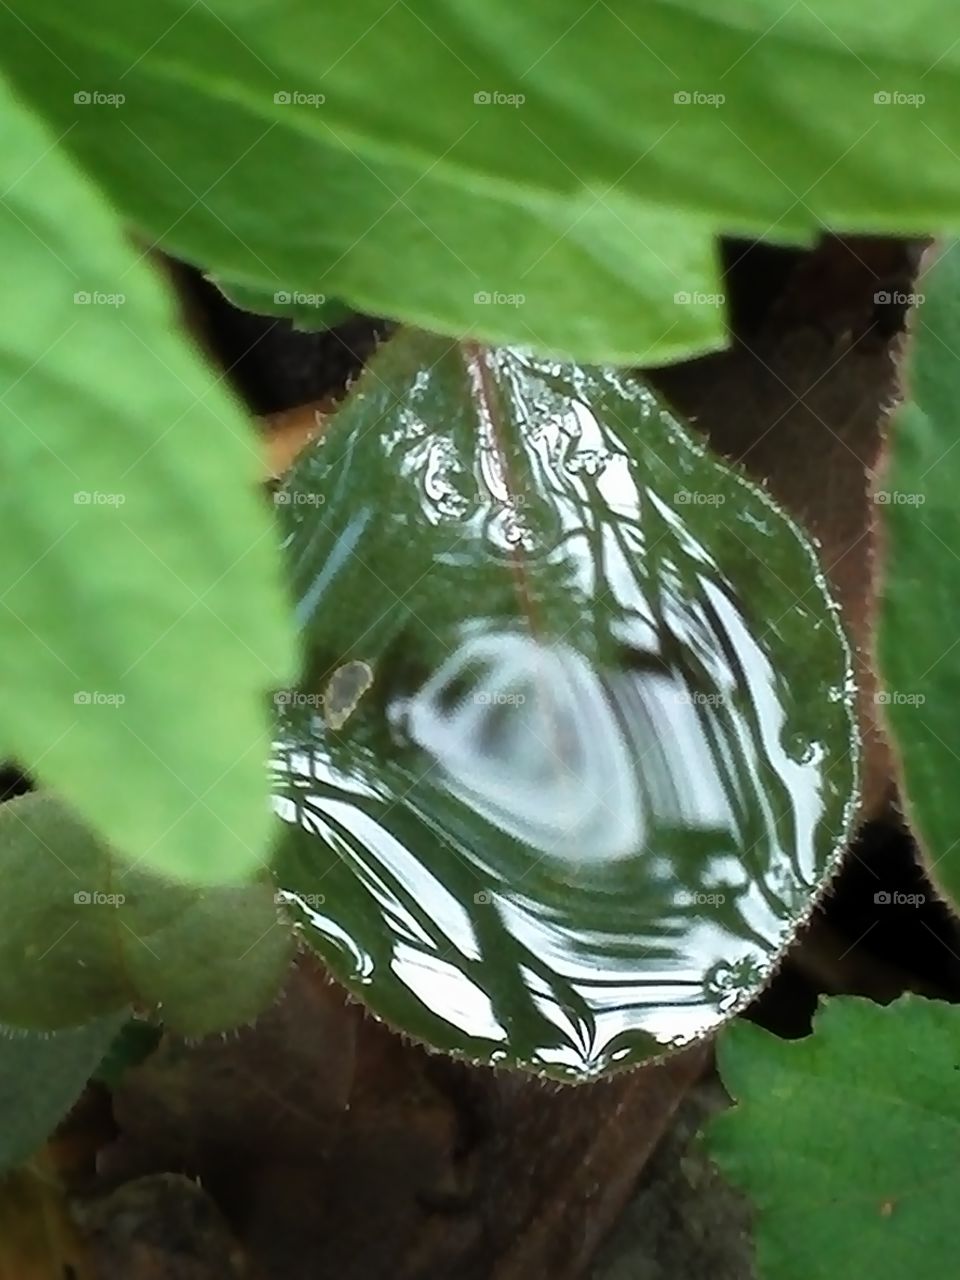 Leaf pond